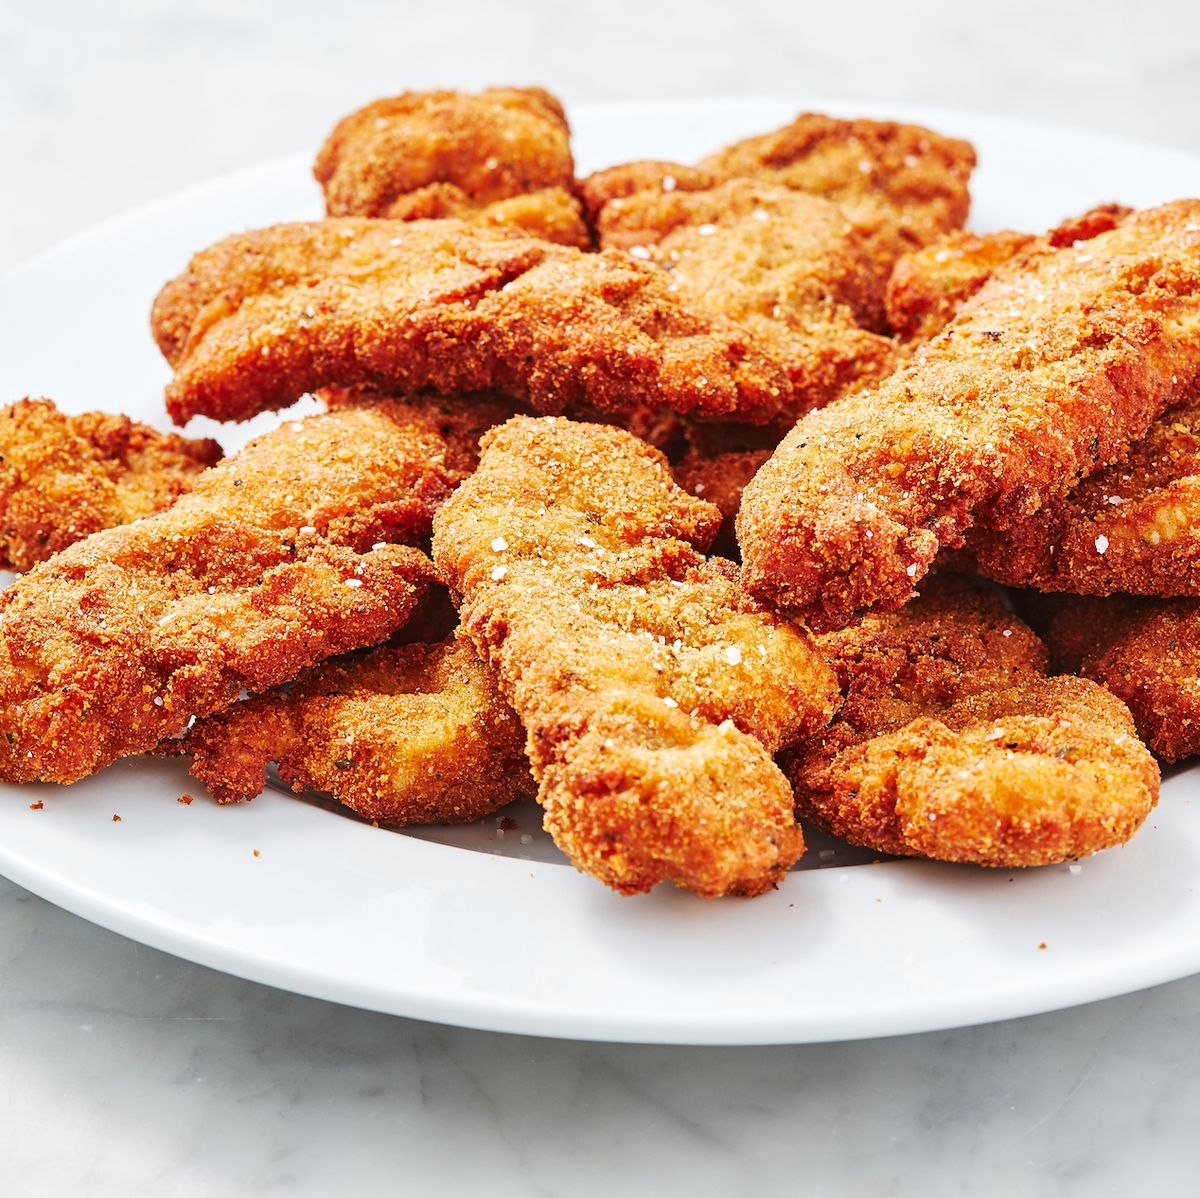 Best Fried Chicken Strips Recipe - How To Make Fried Chicken Strips